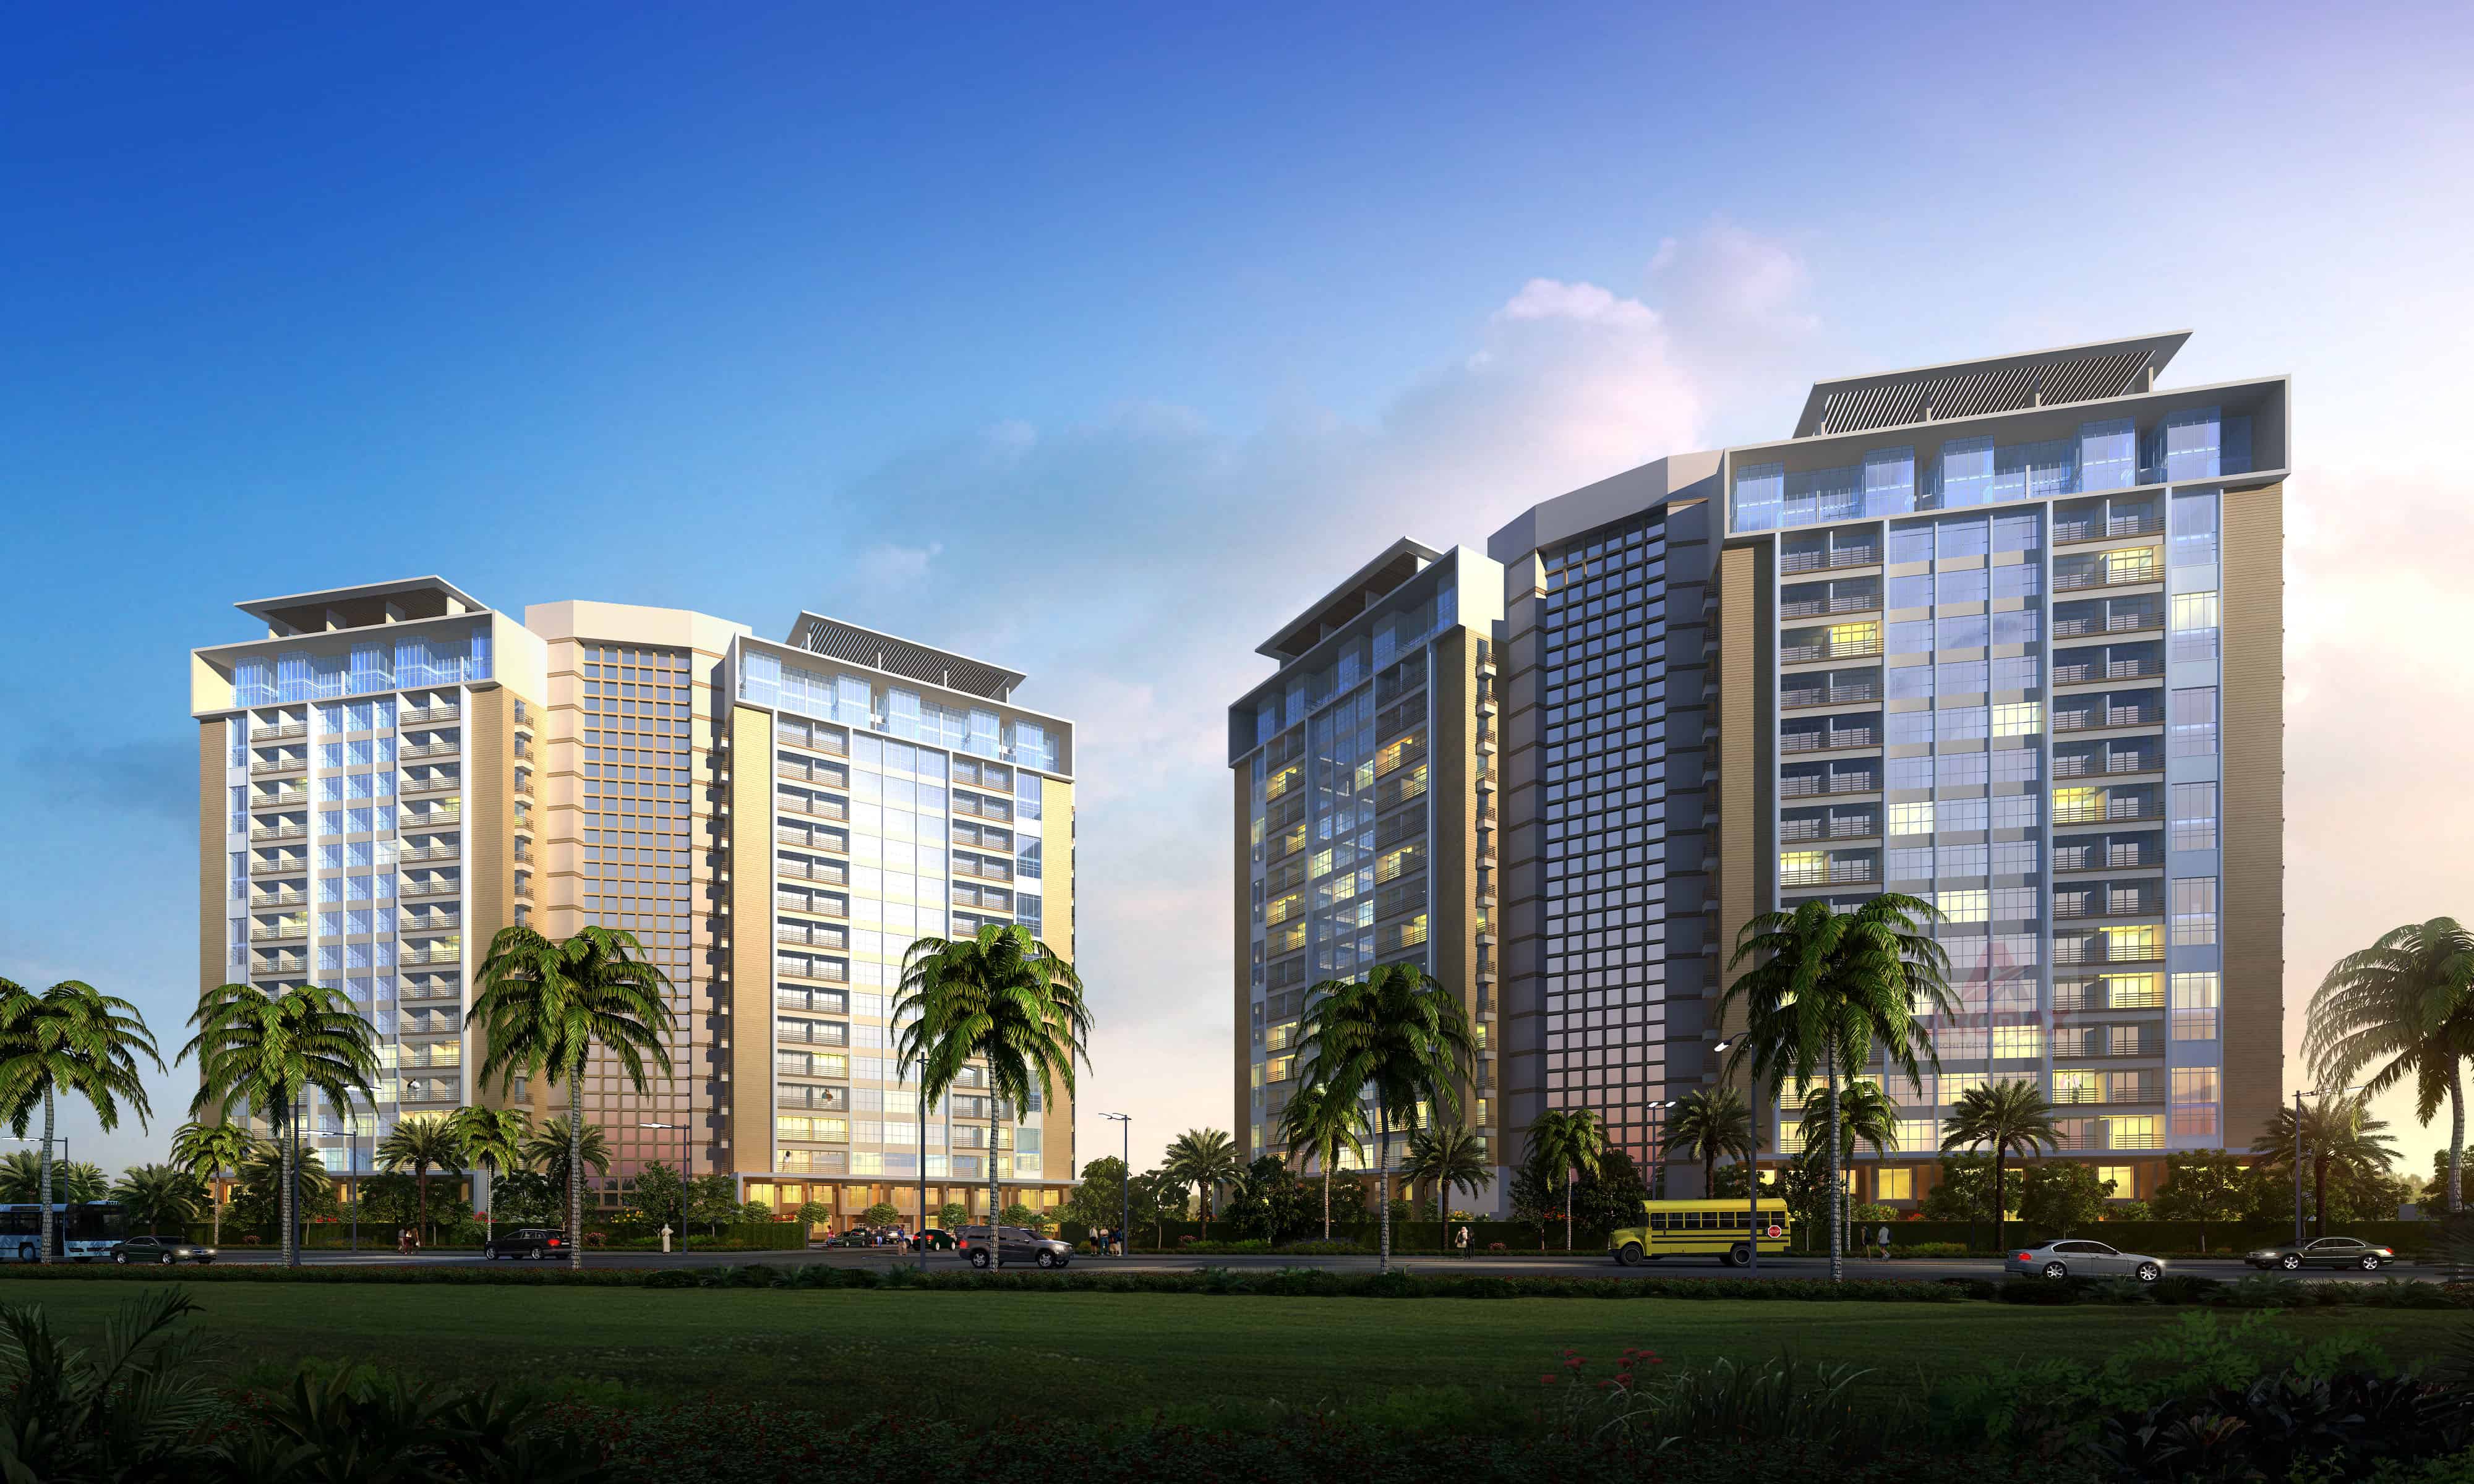 Property g. Residential Towers - Gurgaon. Multi-storey residential building. Бангкок жилые районы. Панорама зданий.